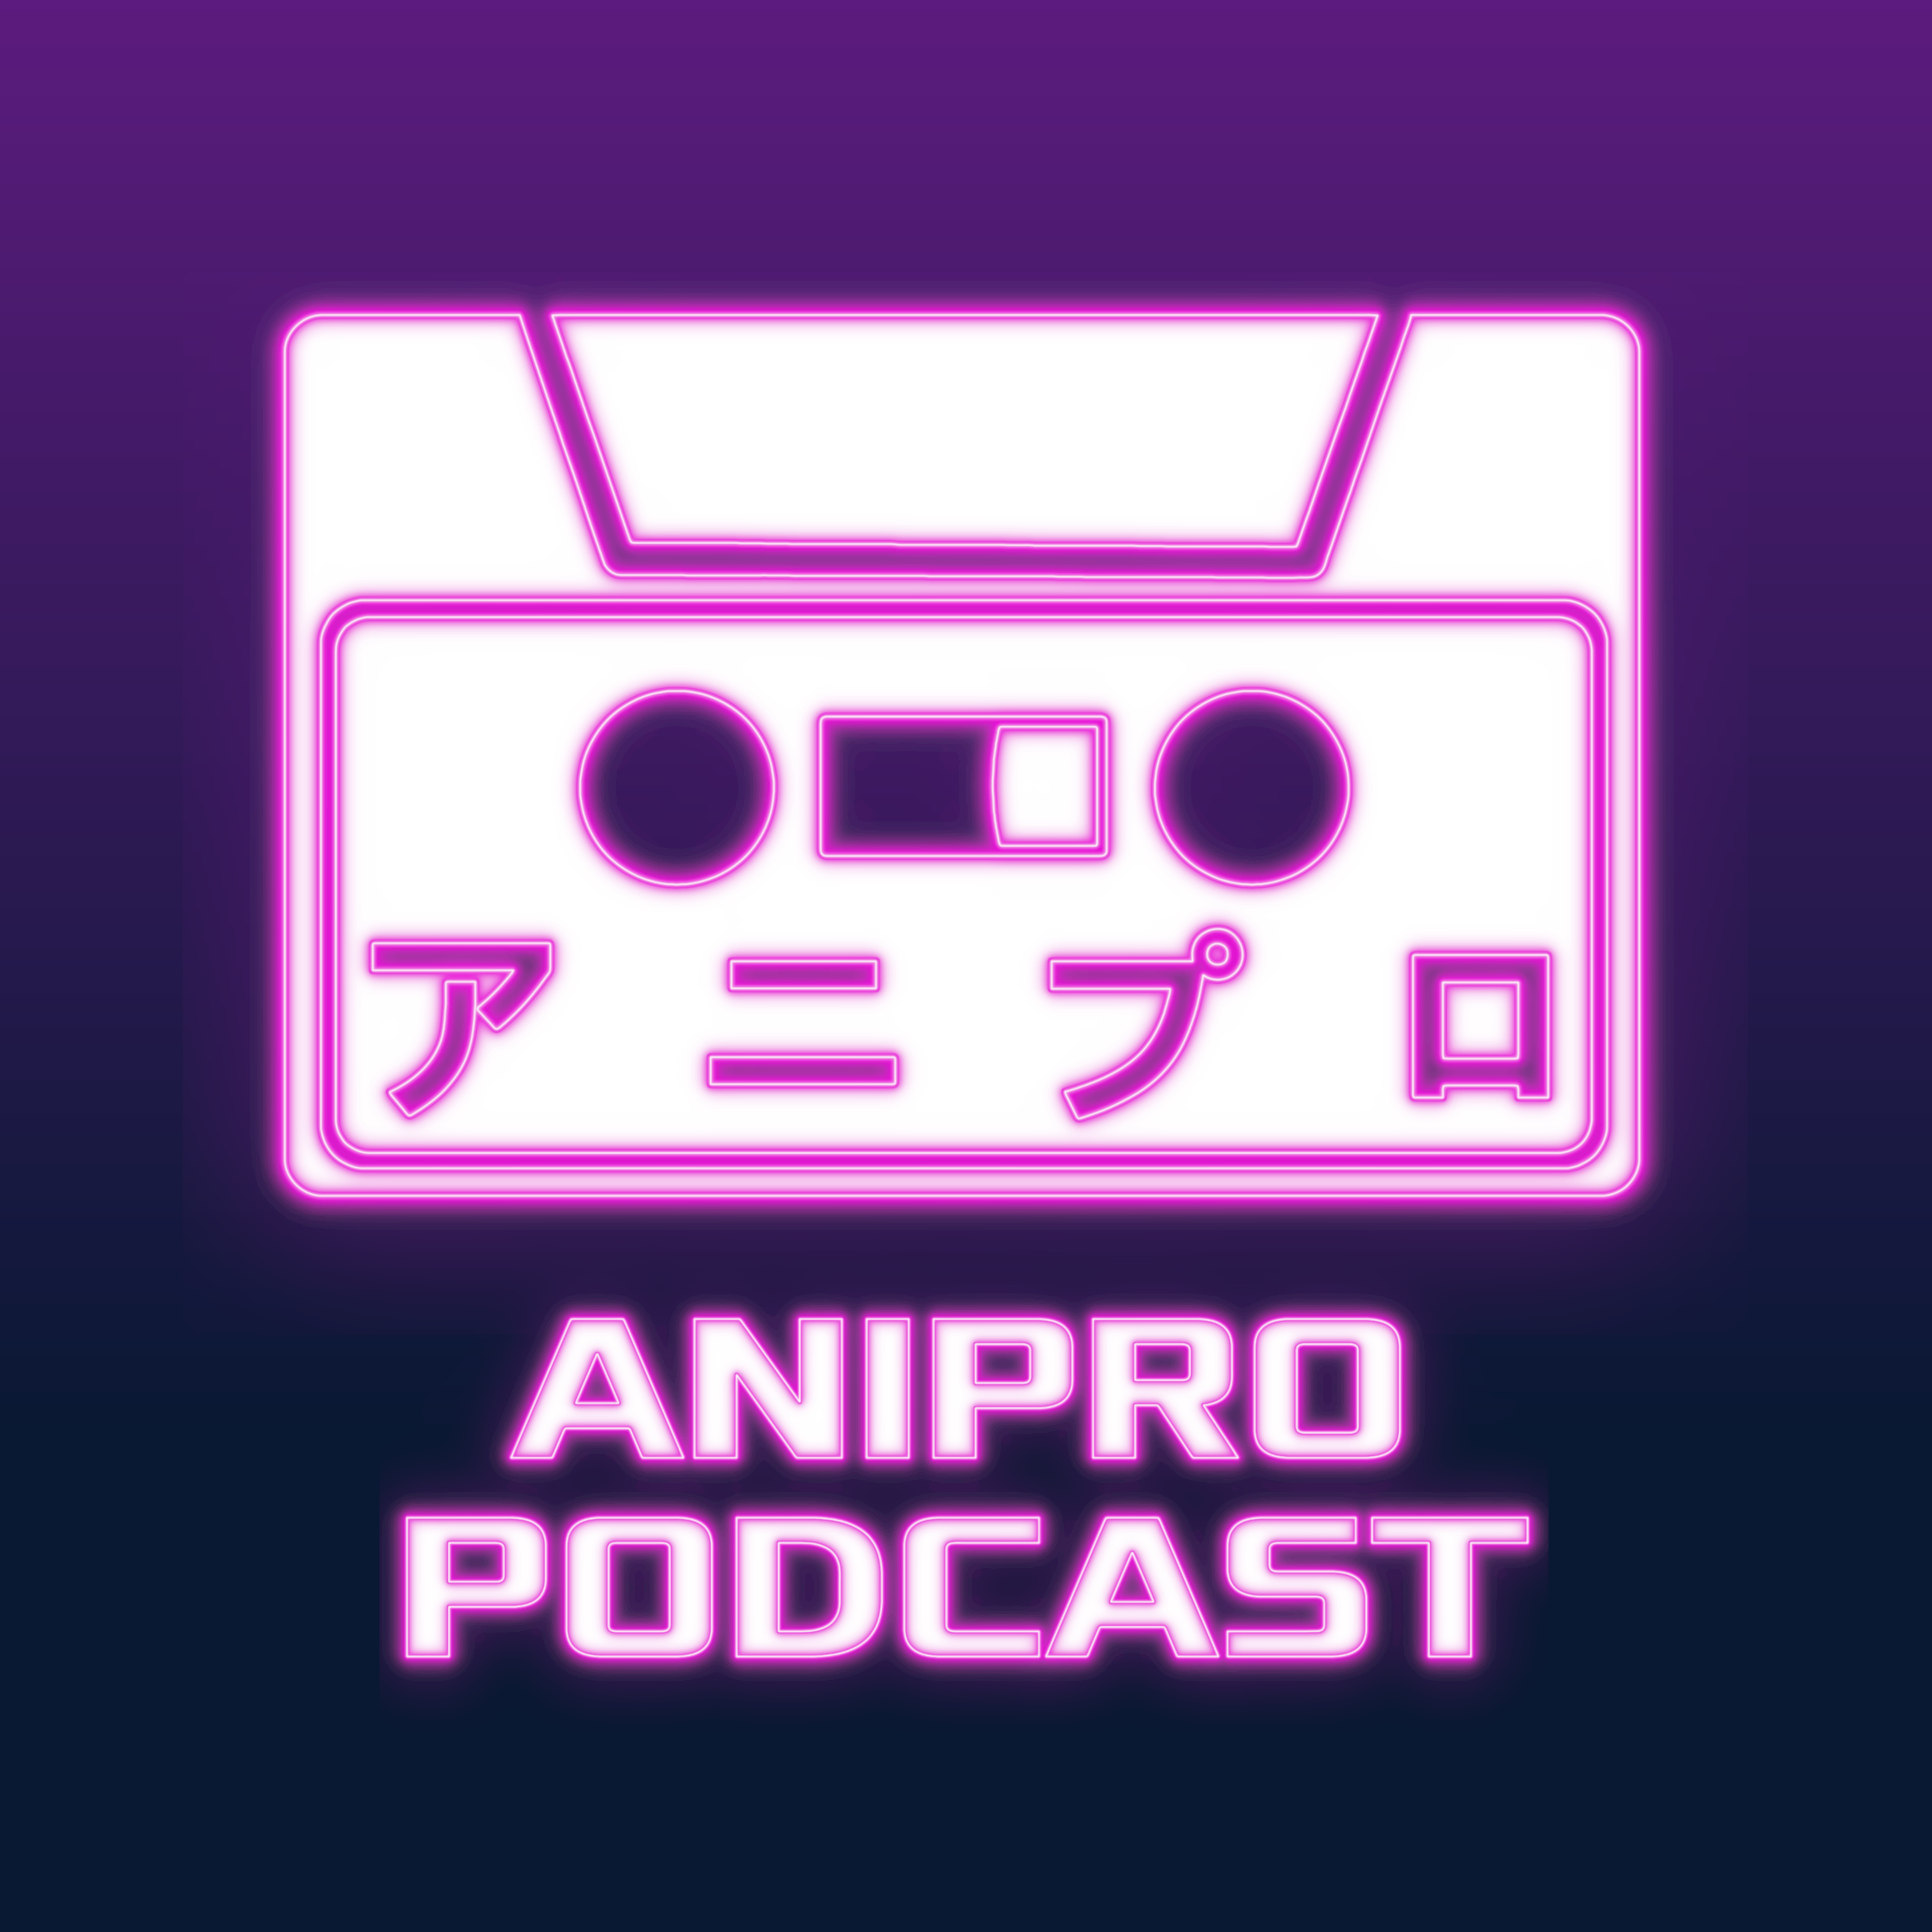 Anipro Podcast